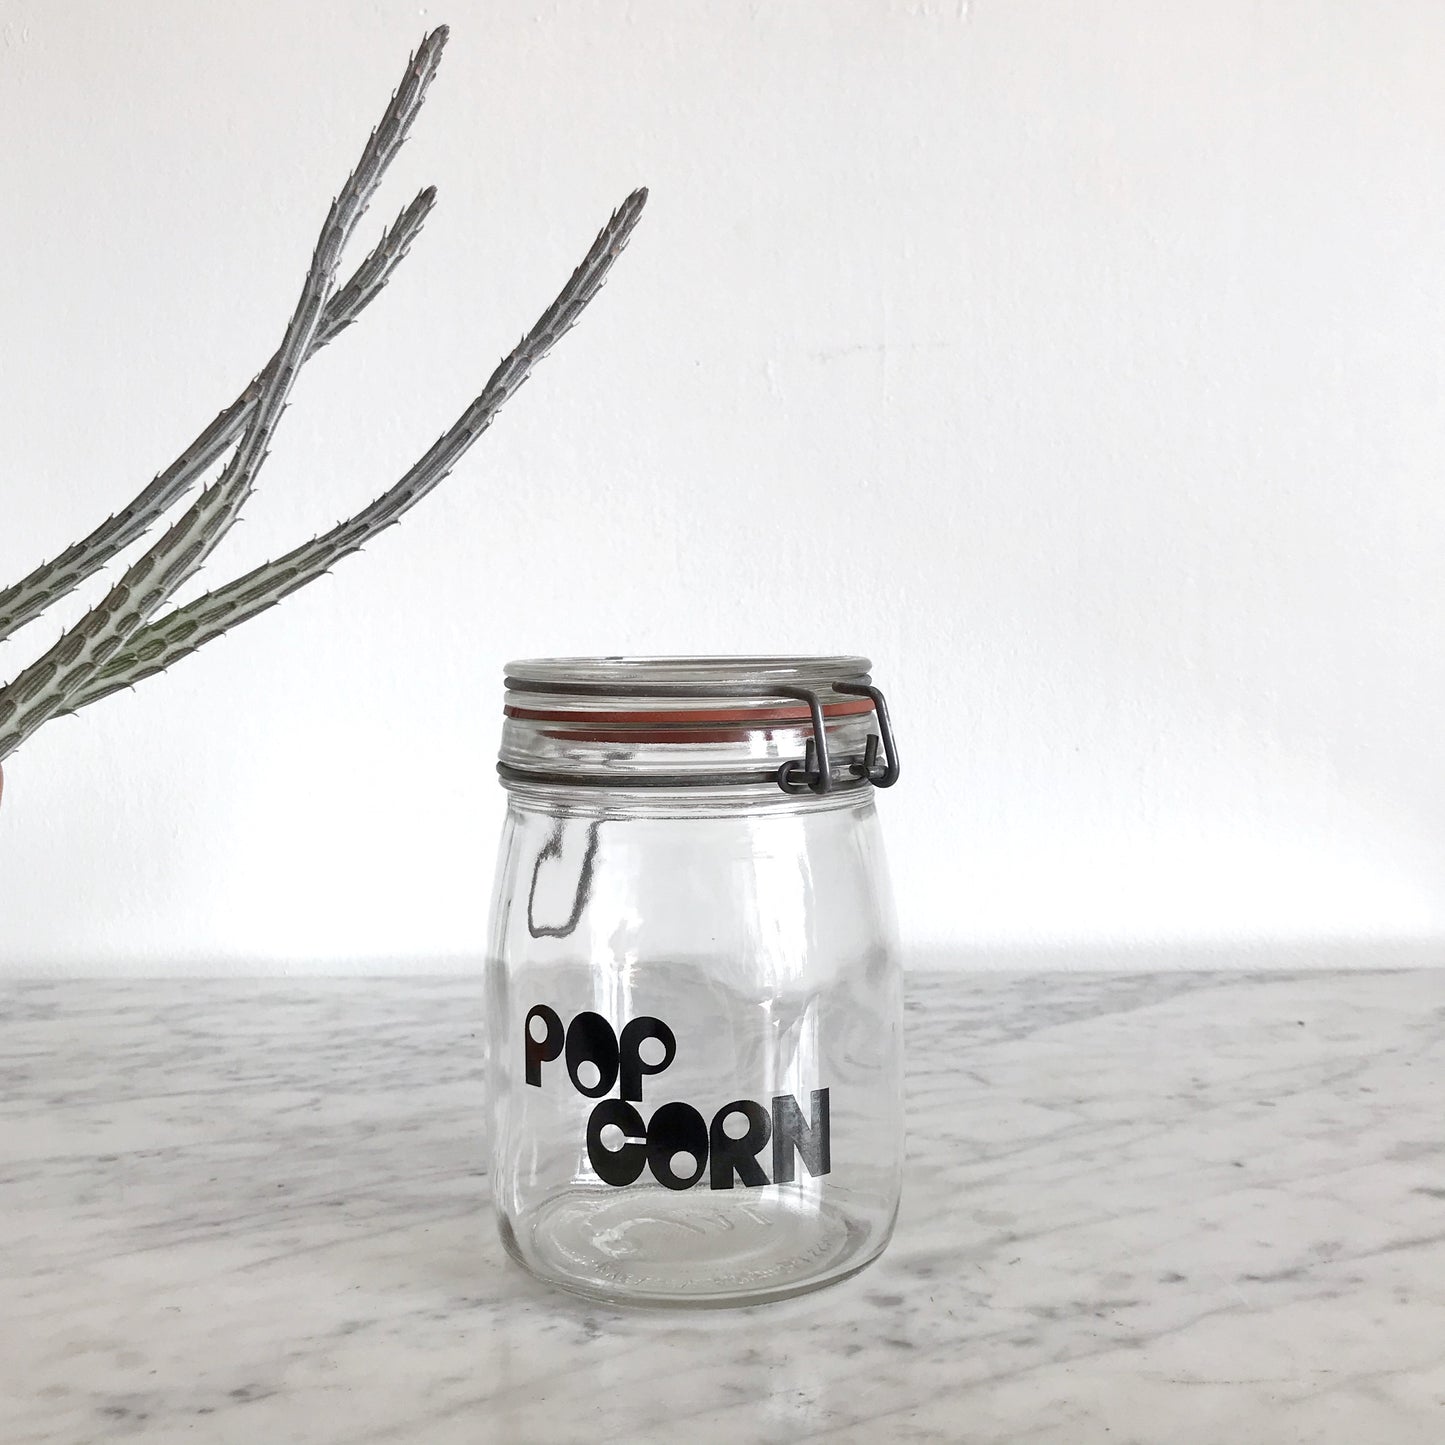 Vintage Glass Popcorn Jar with Typography